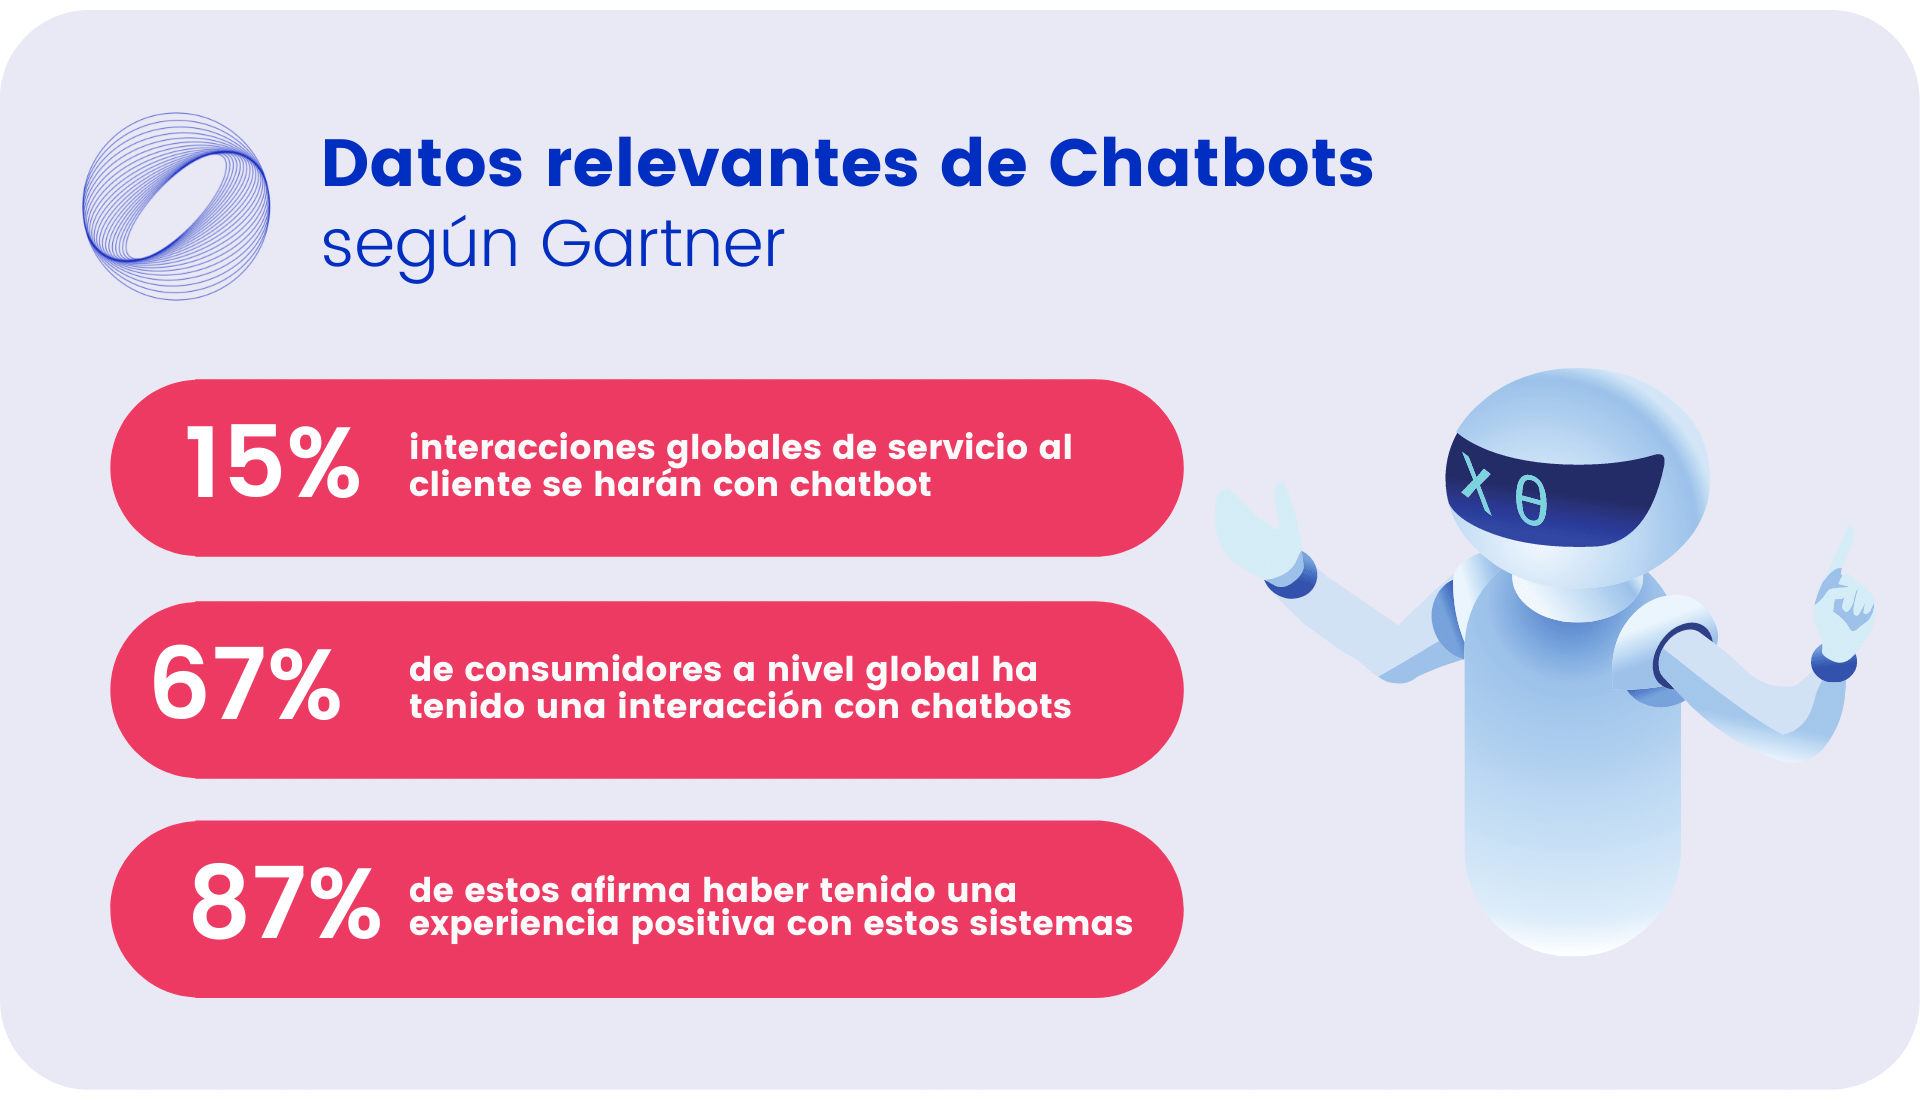 Datos relevantes de Chatbots según Gartner 